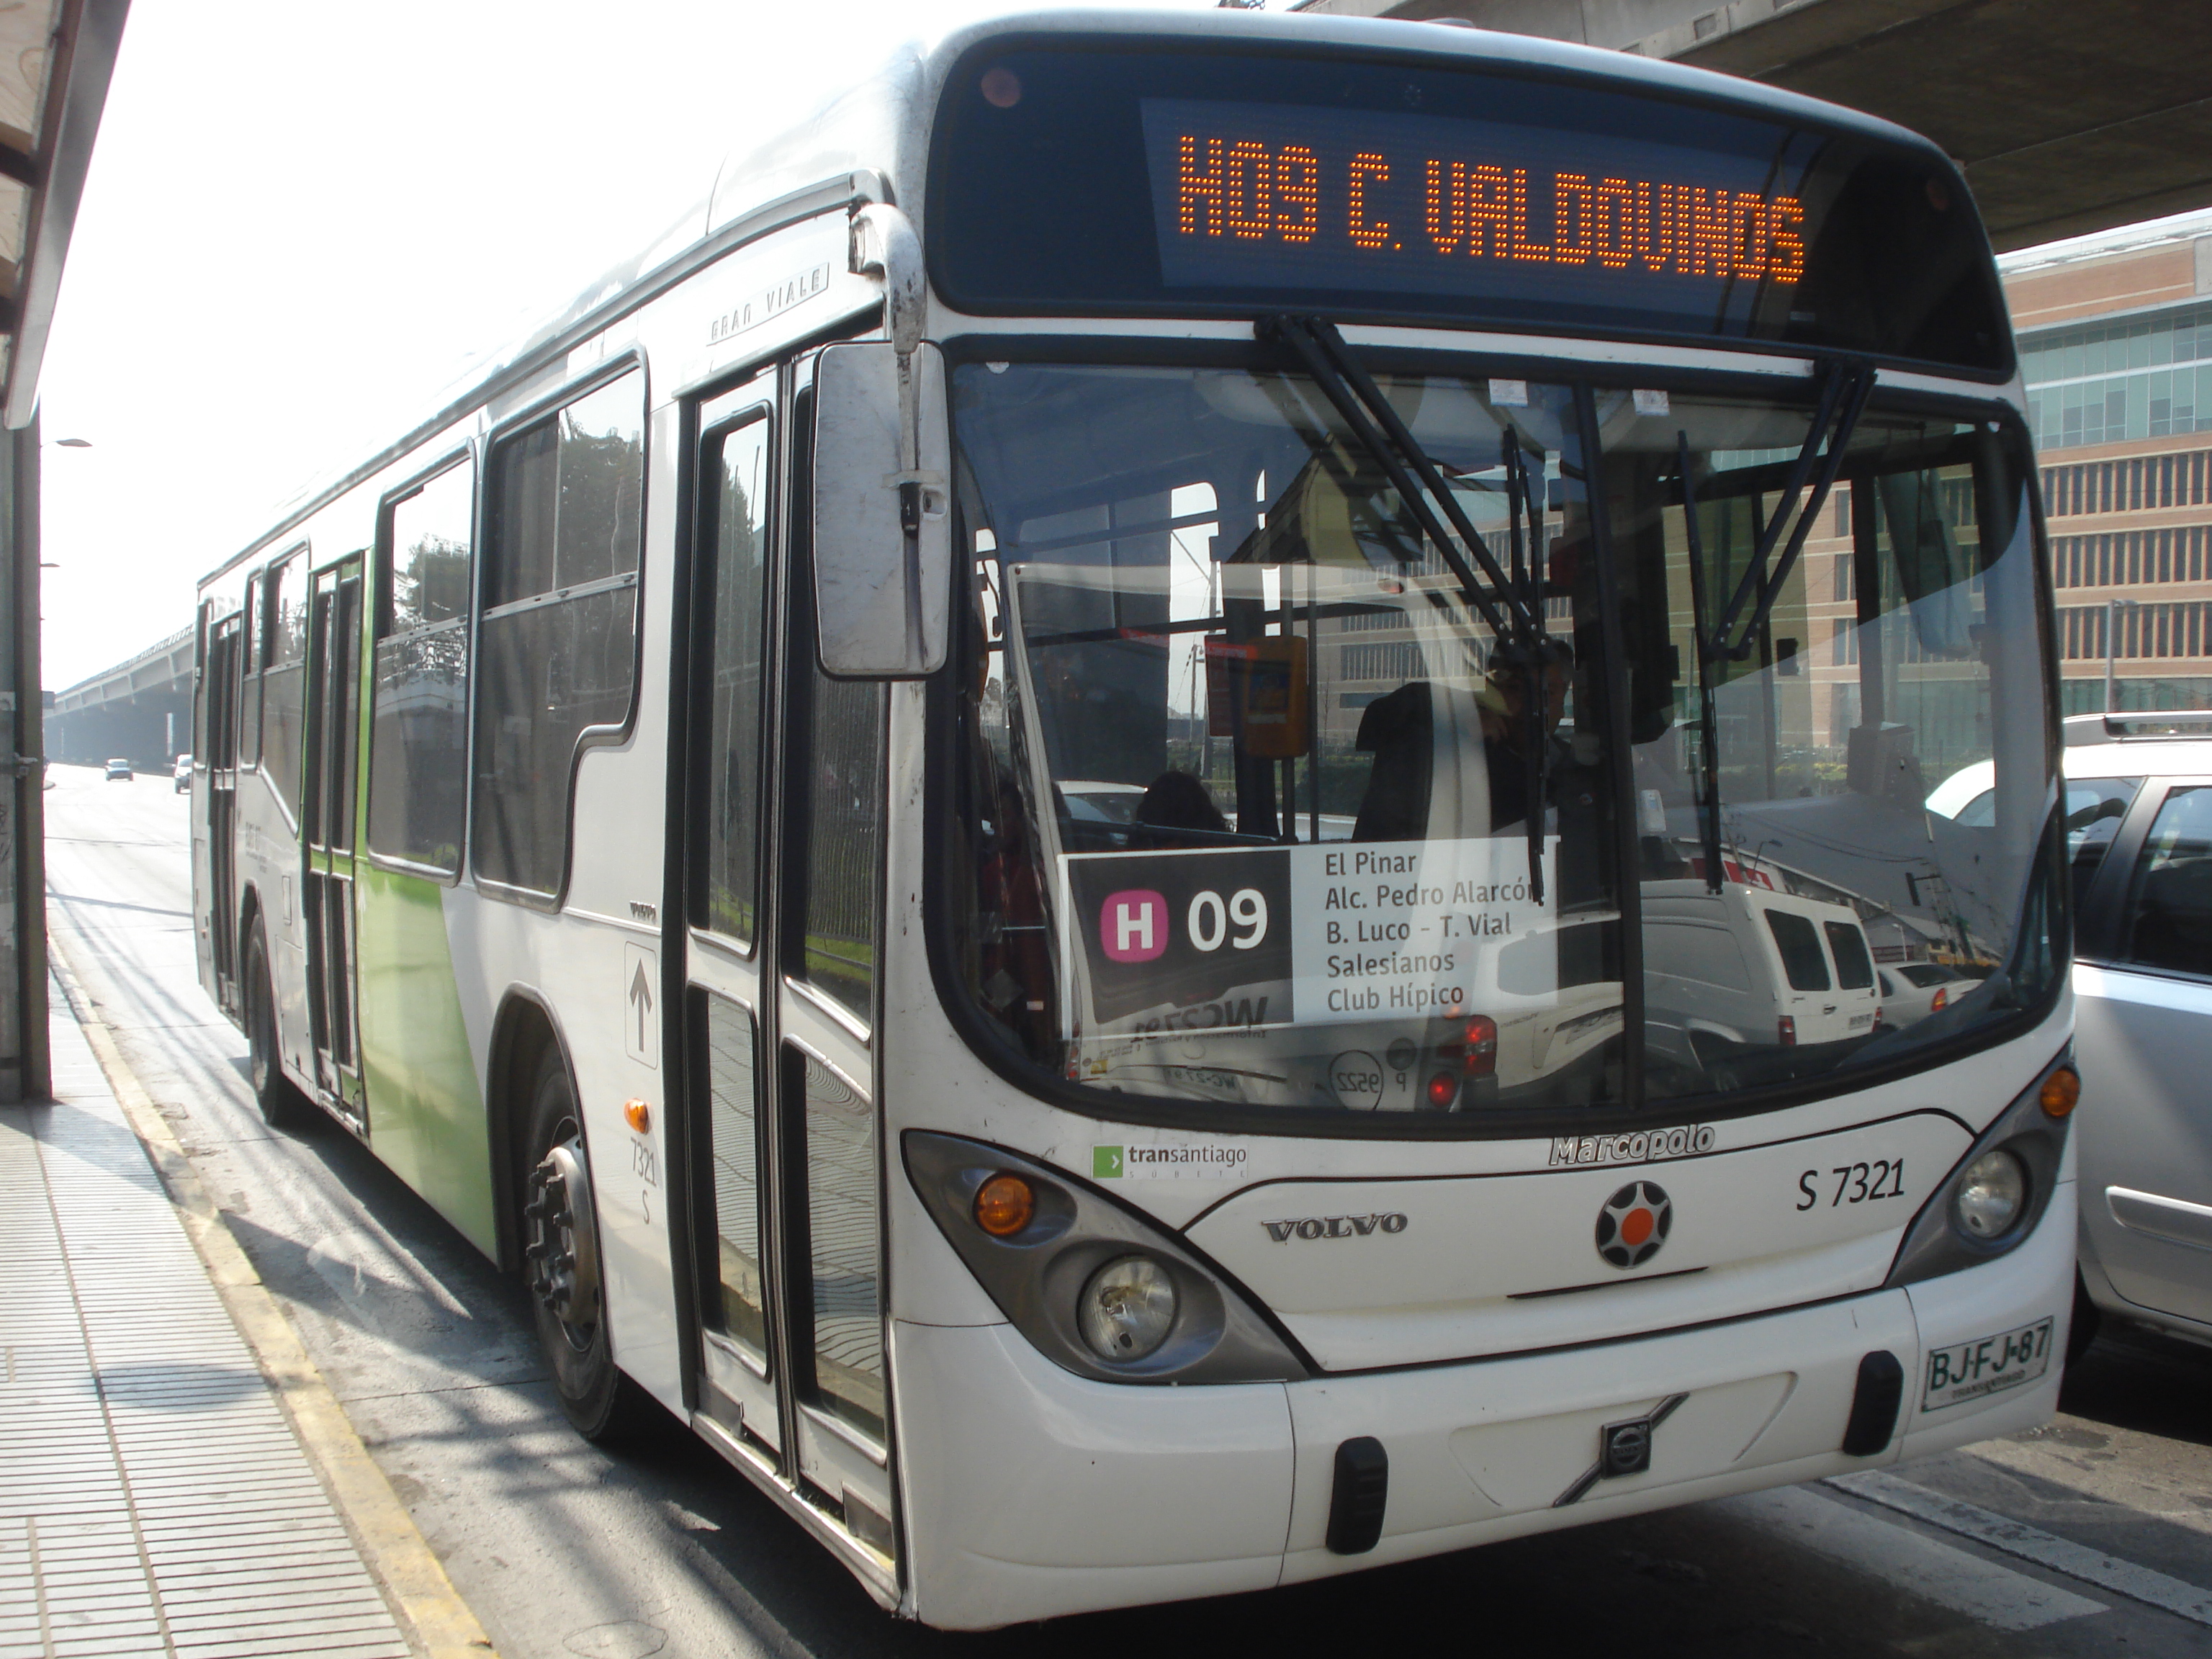 File:Marcopolo Gran Viale bus in Santiago de Chile (H09).jpg ...